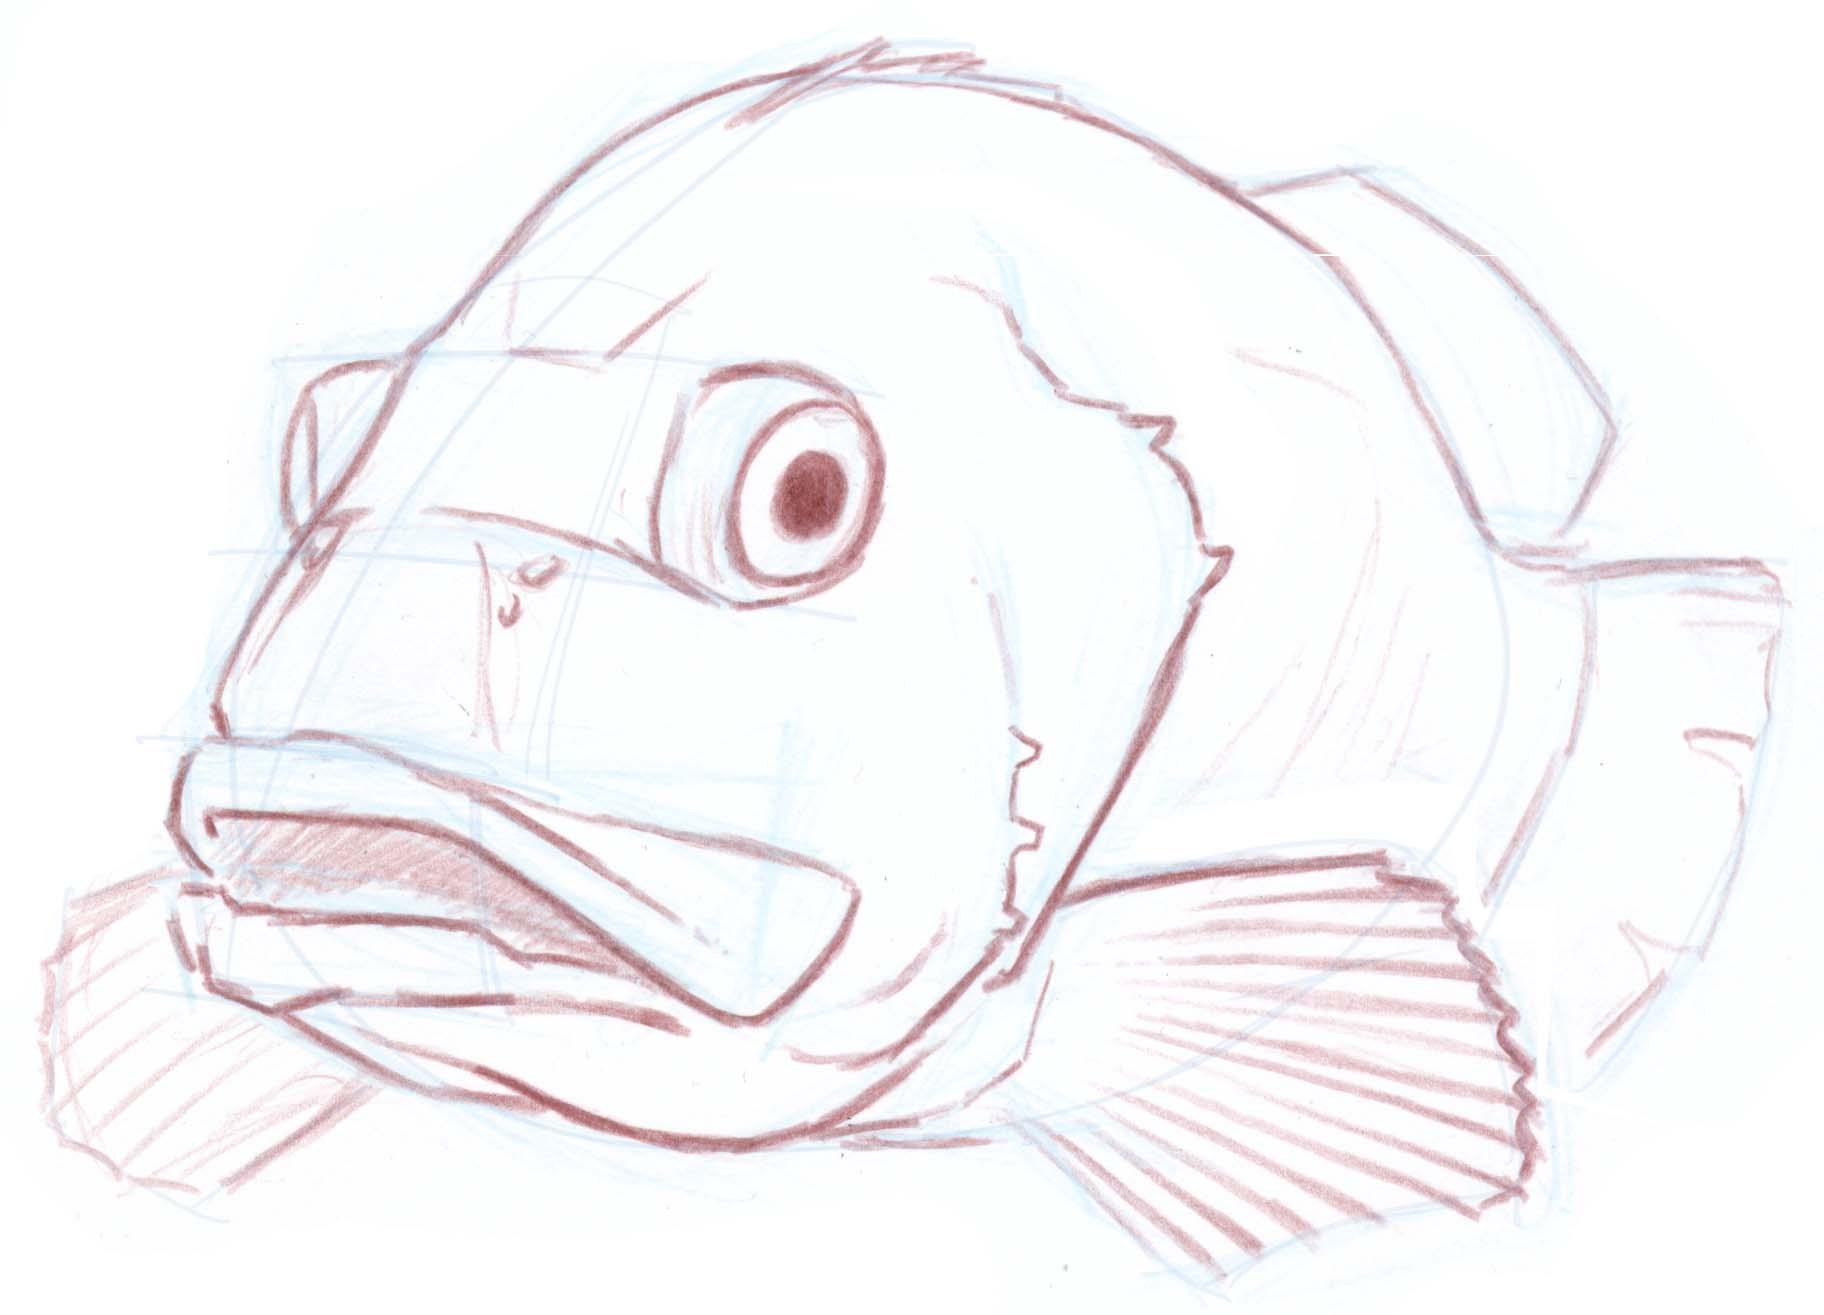 fish eye sketch